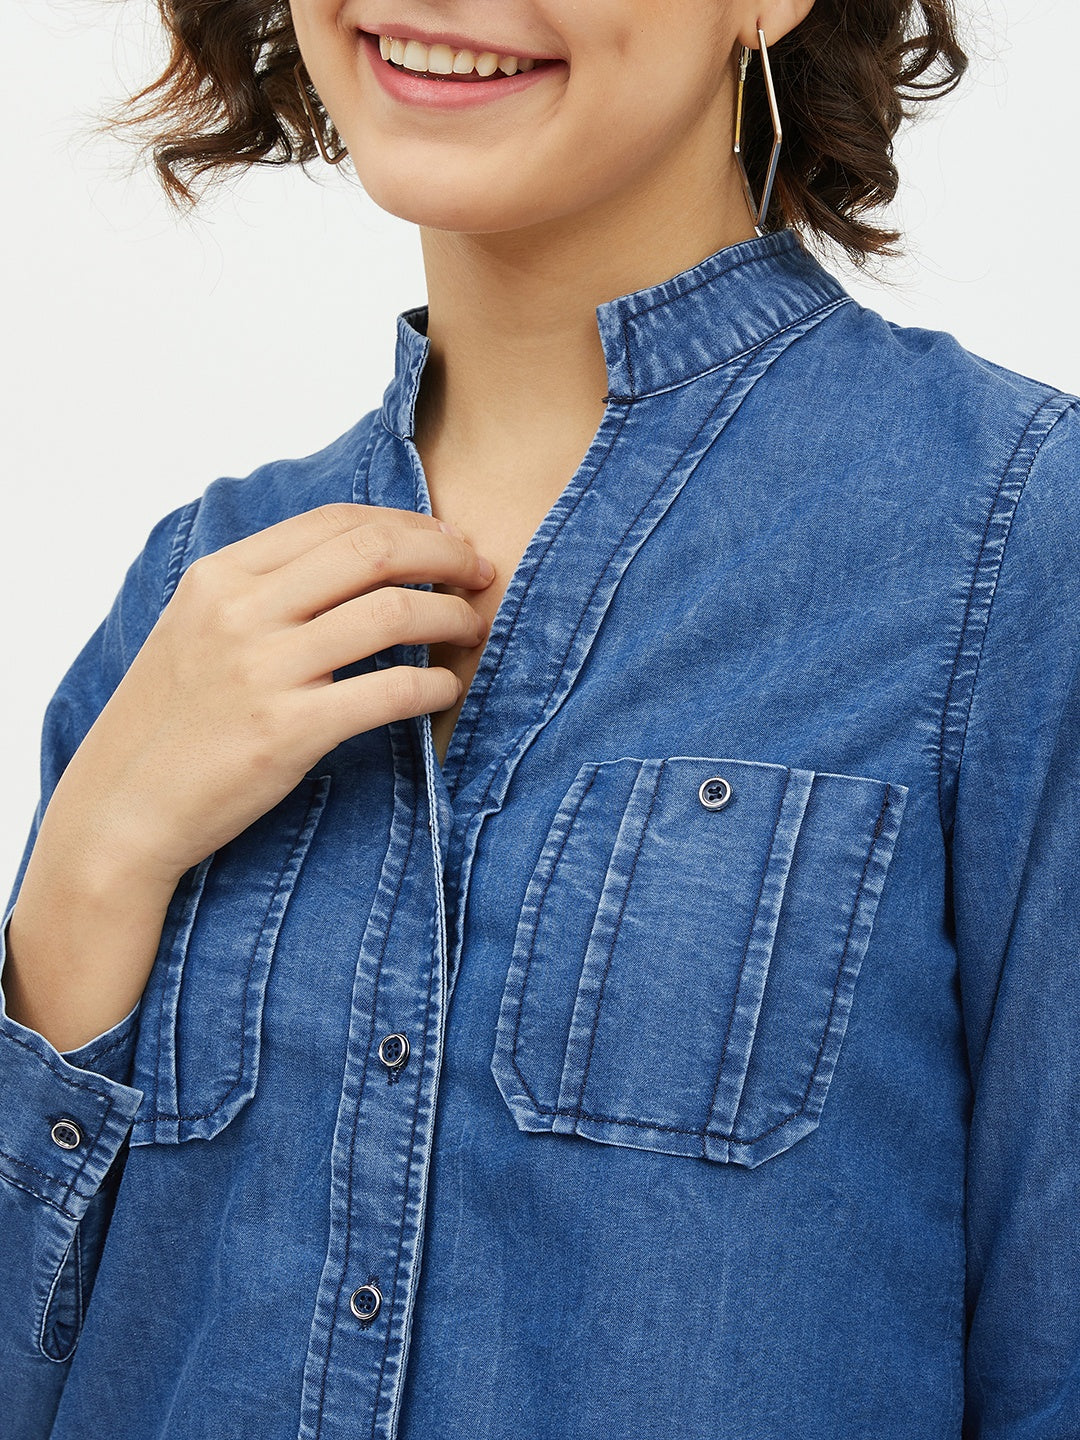 Women's Denim Shirt with Pocket detail - StyleStone